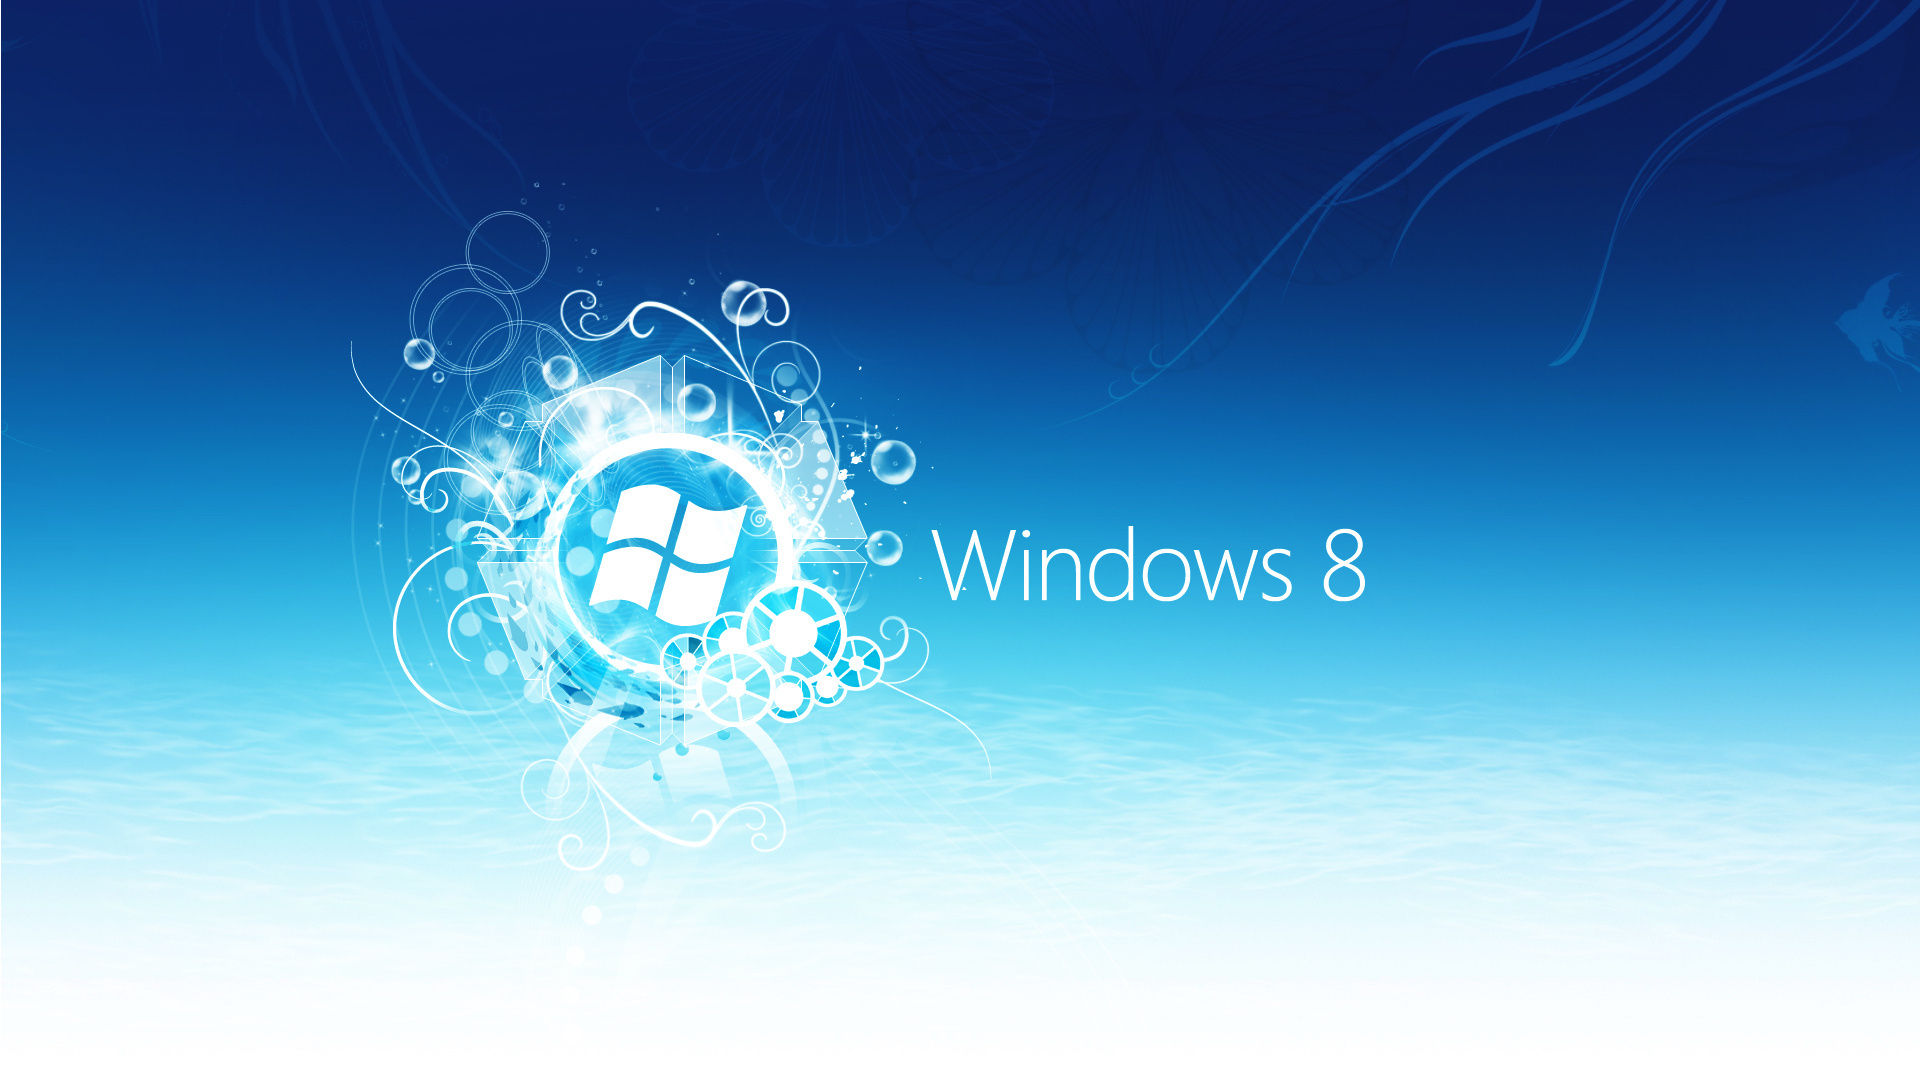 Windows 8 wallpaper hd 3d for desktop blue i10